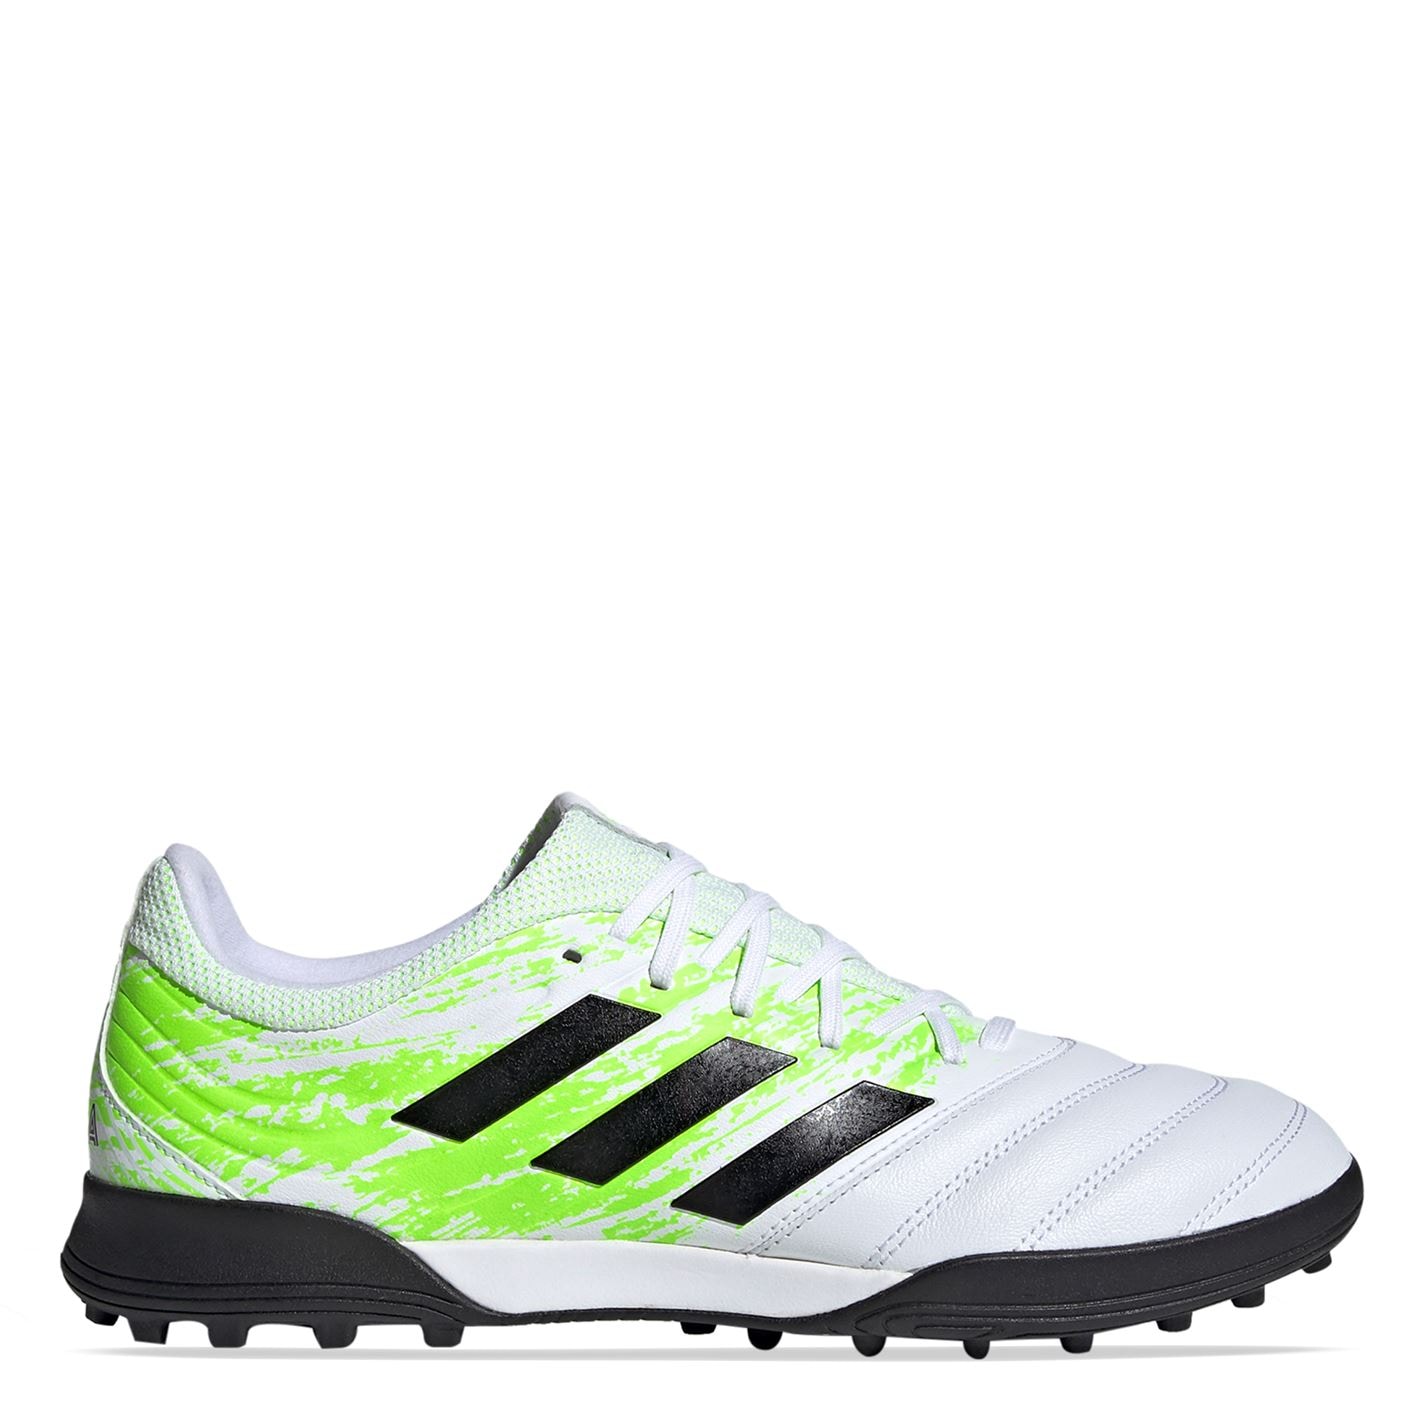 Adidasi Gazon Sintetic Adidasi Fotbal adidas Copa 20.3 alb negru verde